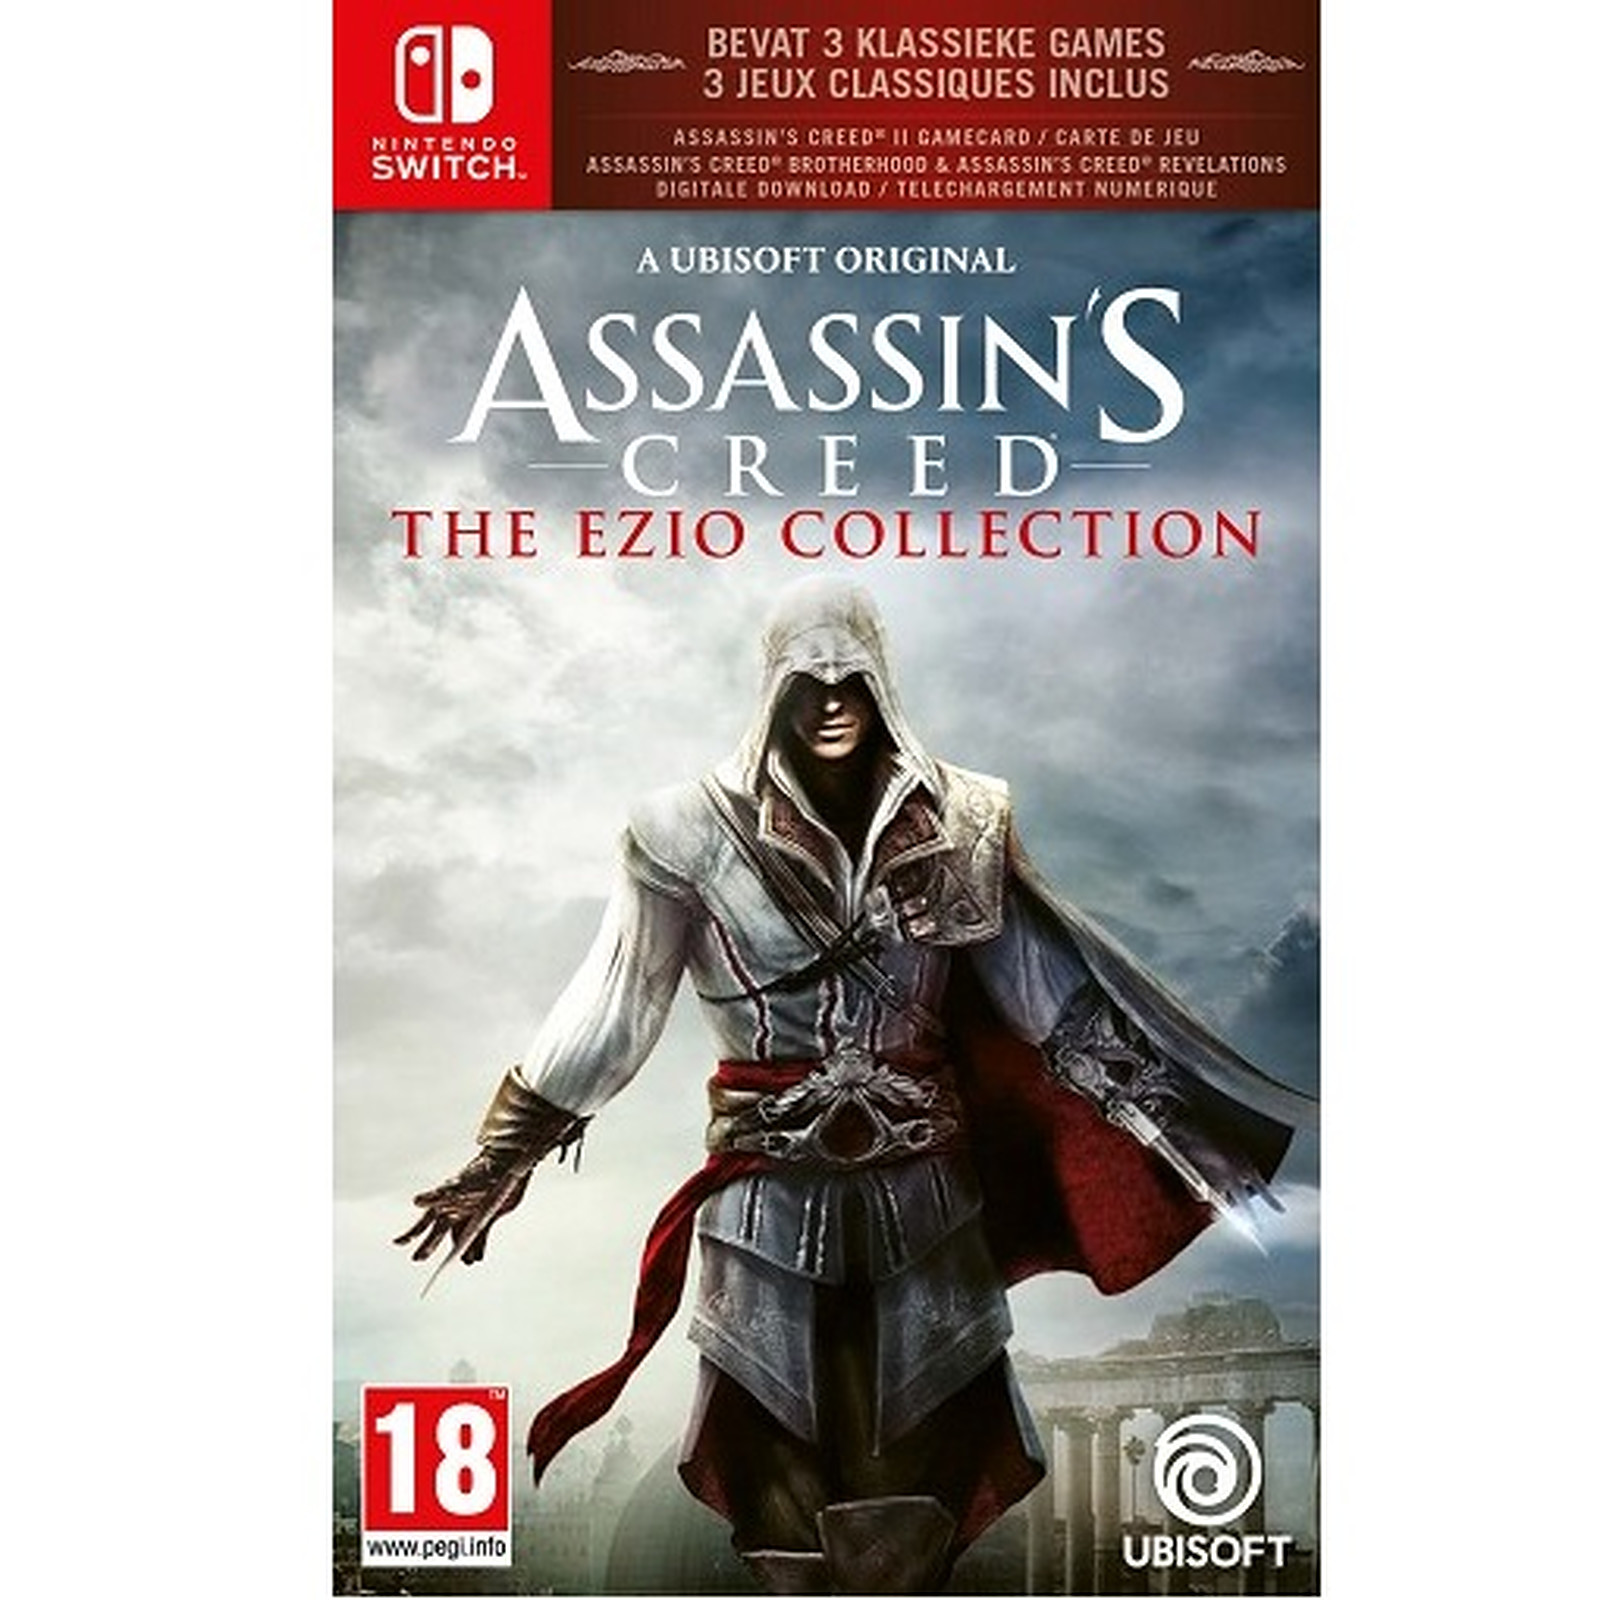 Assassin s Creed Ezio Collection (SWITCH) - Jeux Nintendo Switch Ubisoft